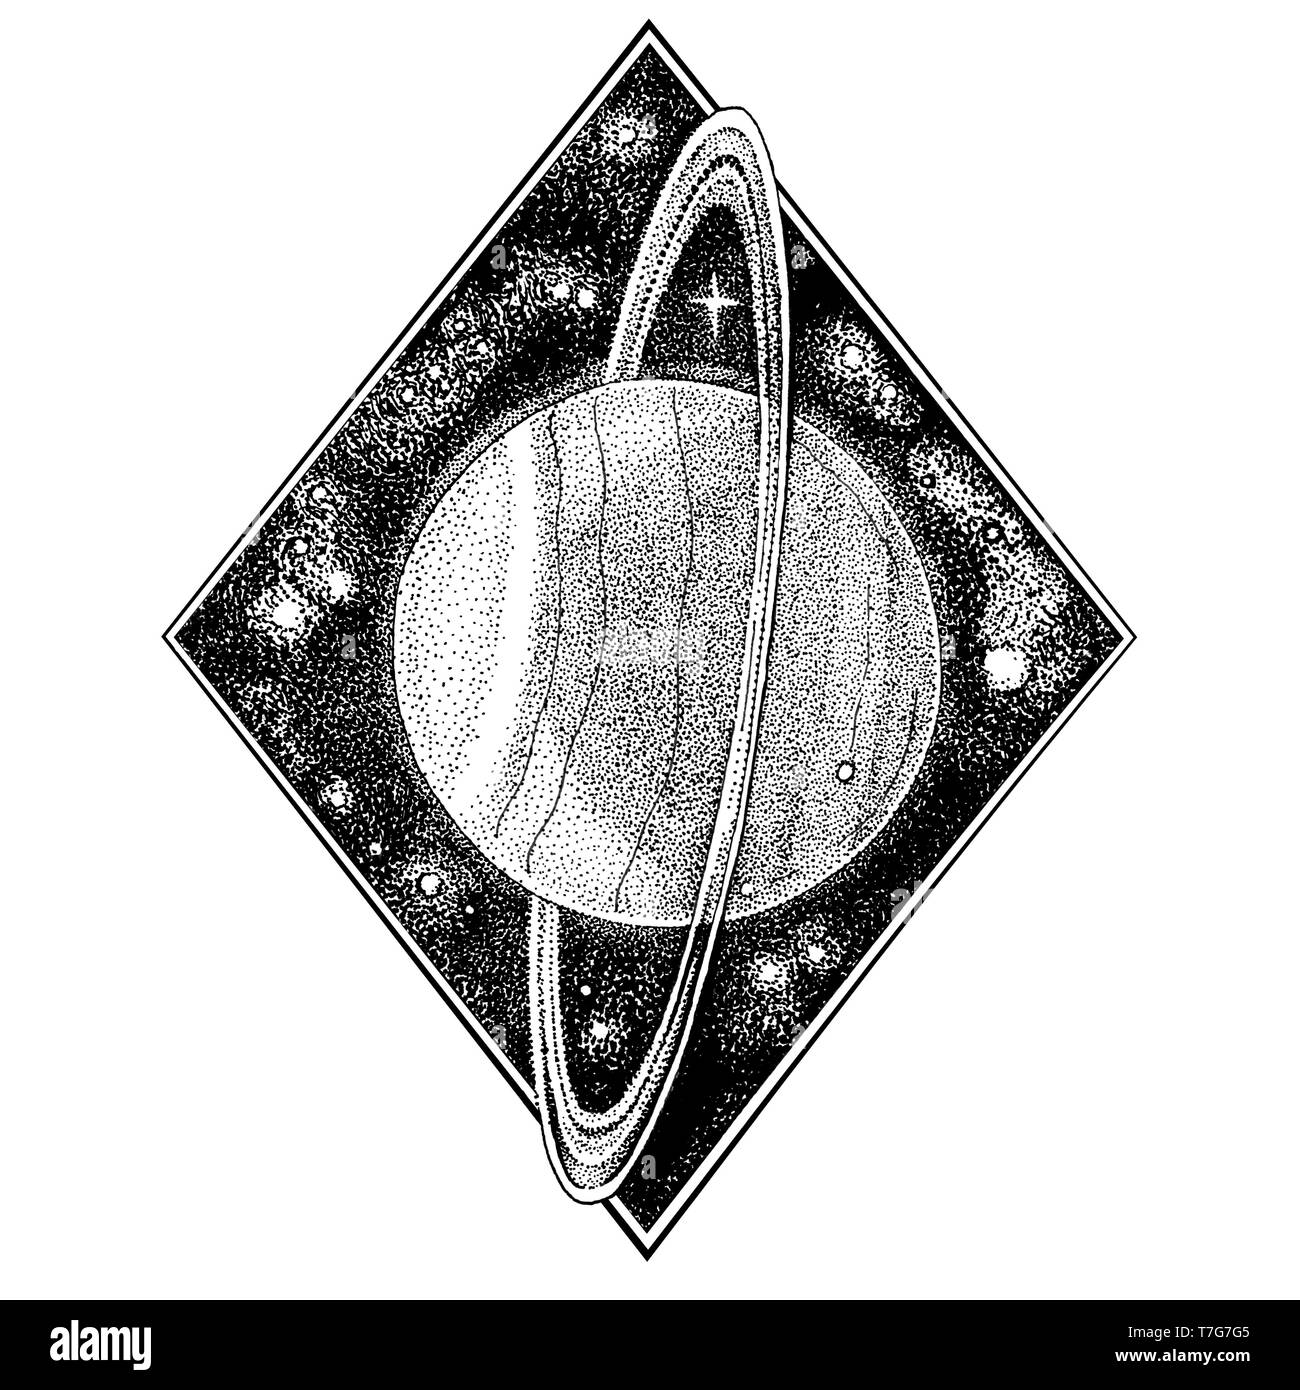 Uranus planet. Hand drawn illustration in dotwork style. Space concept, astrology symbol, astronomy t shirt print, cosmic logo design. Stock Photo